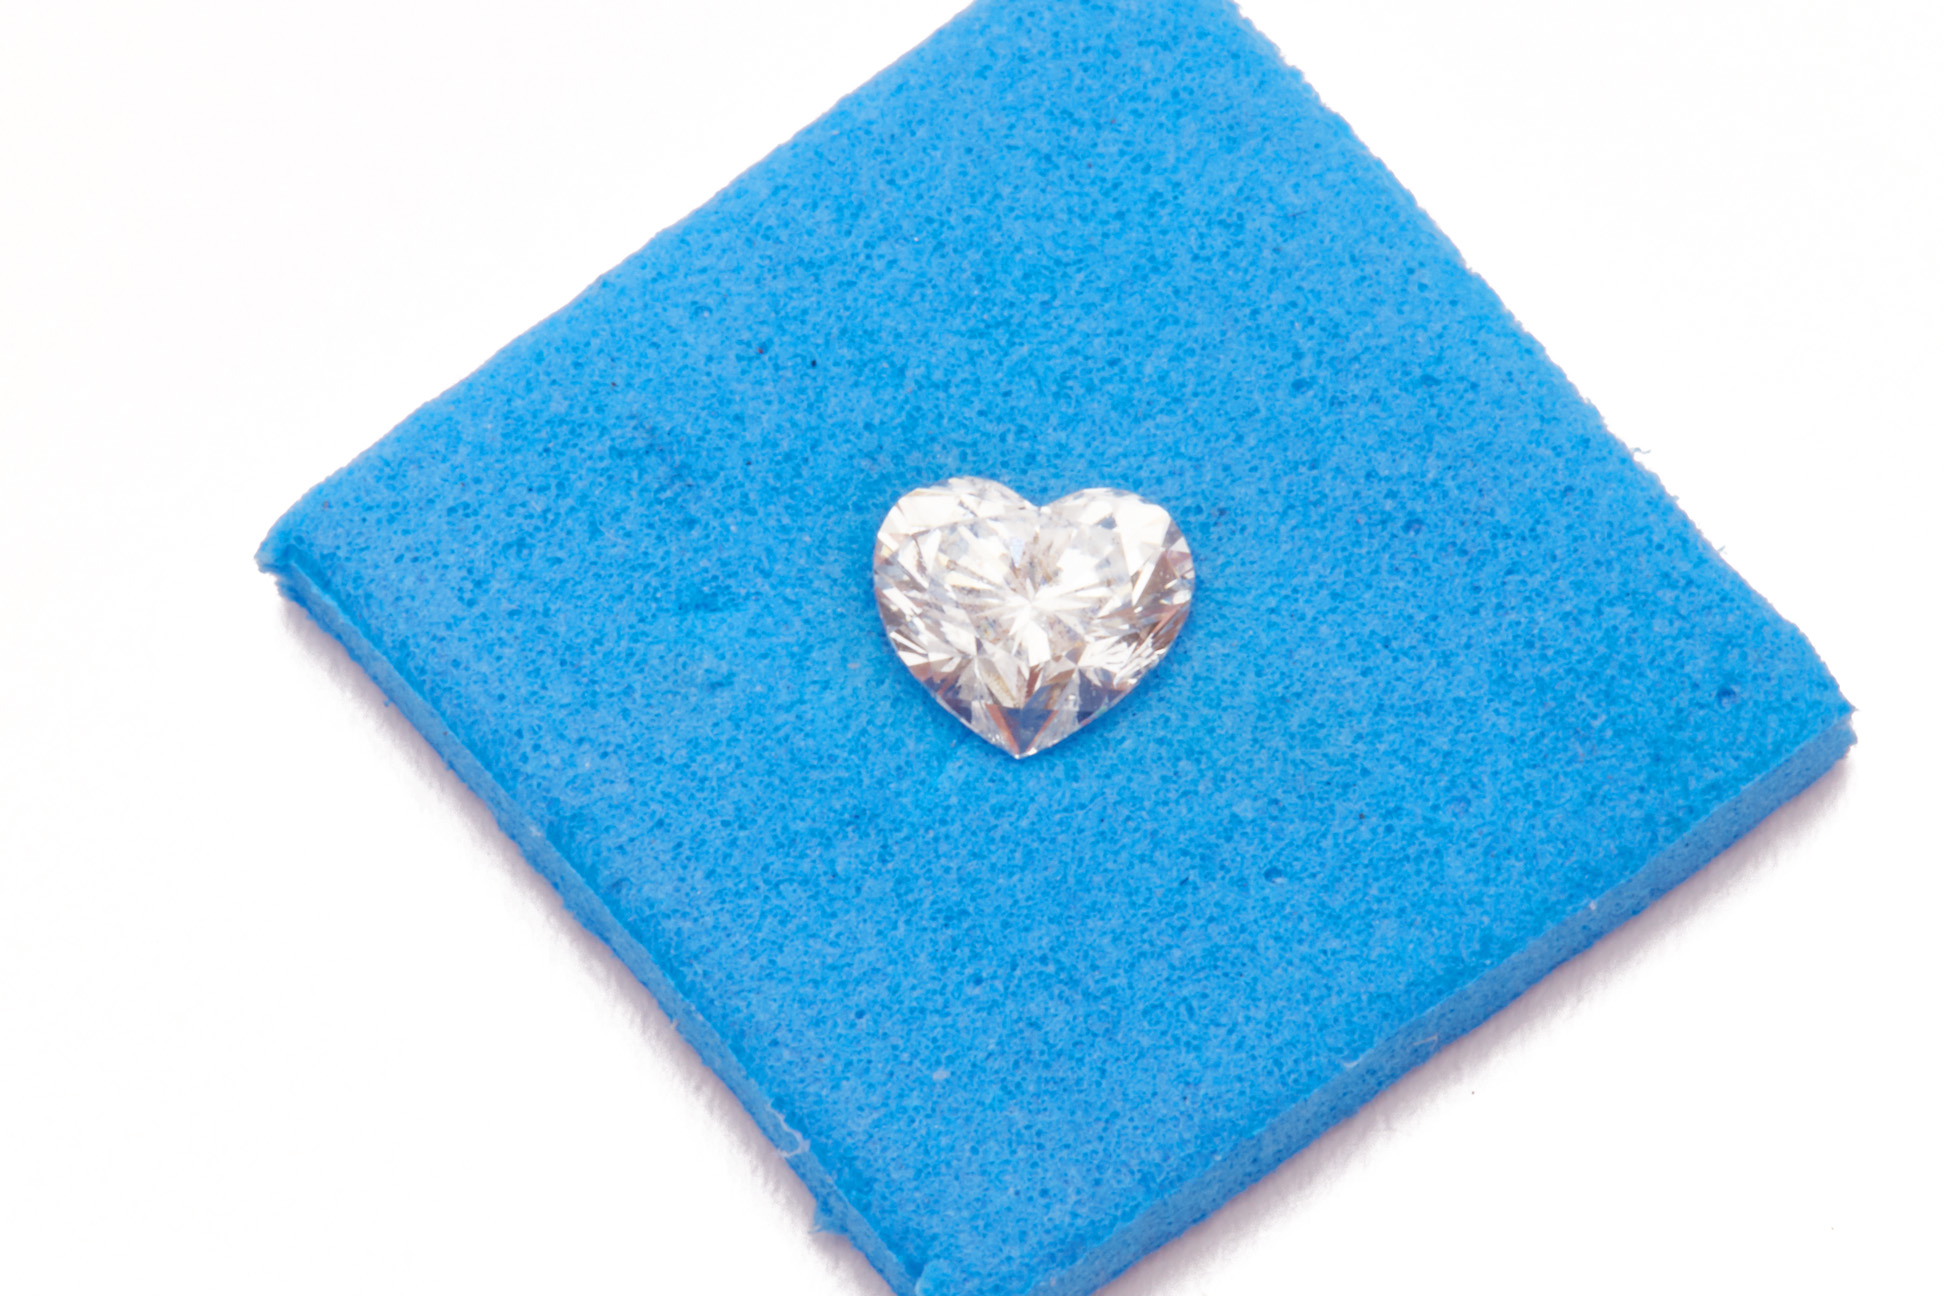 A HEART SHAPED LOOSE DIAMOND - Image 3 of 4